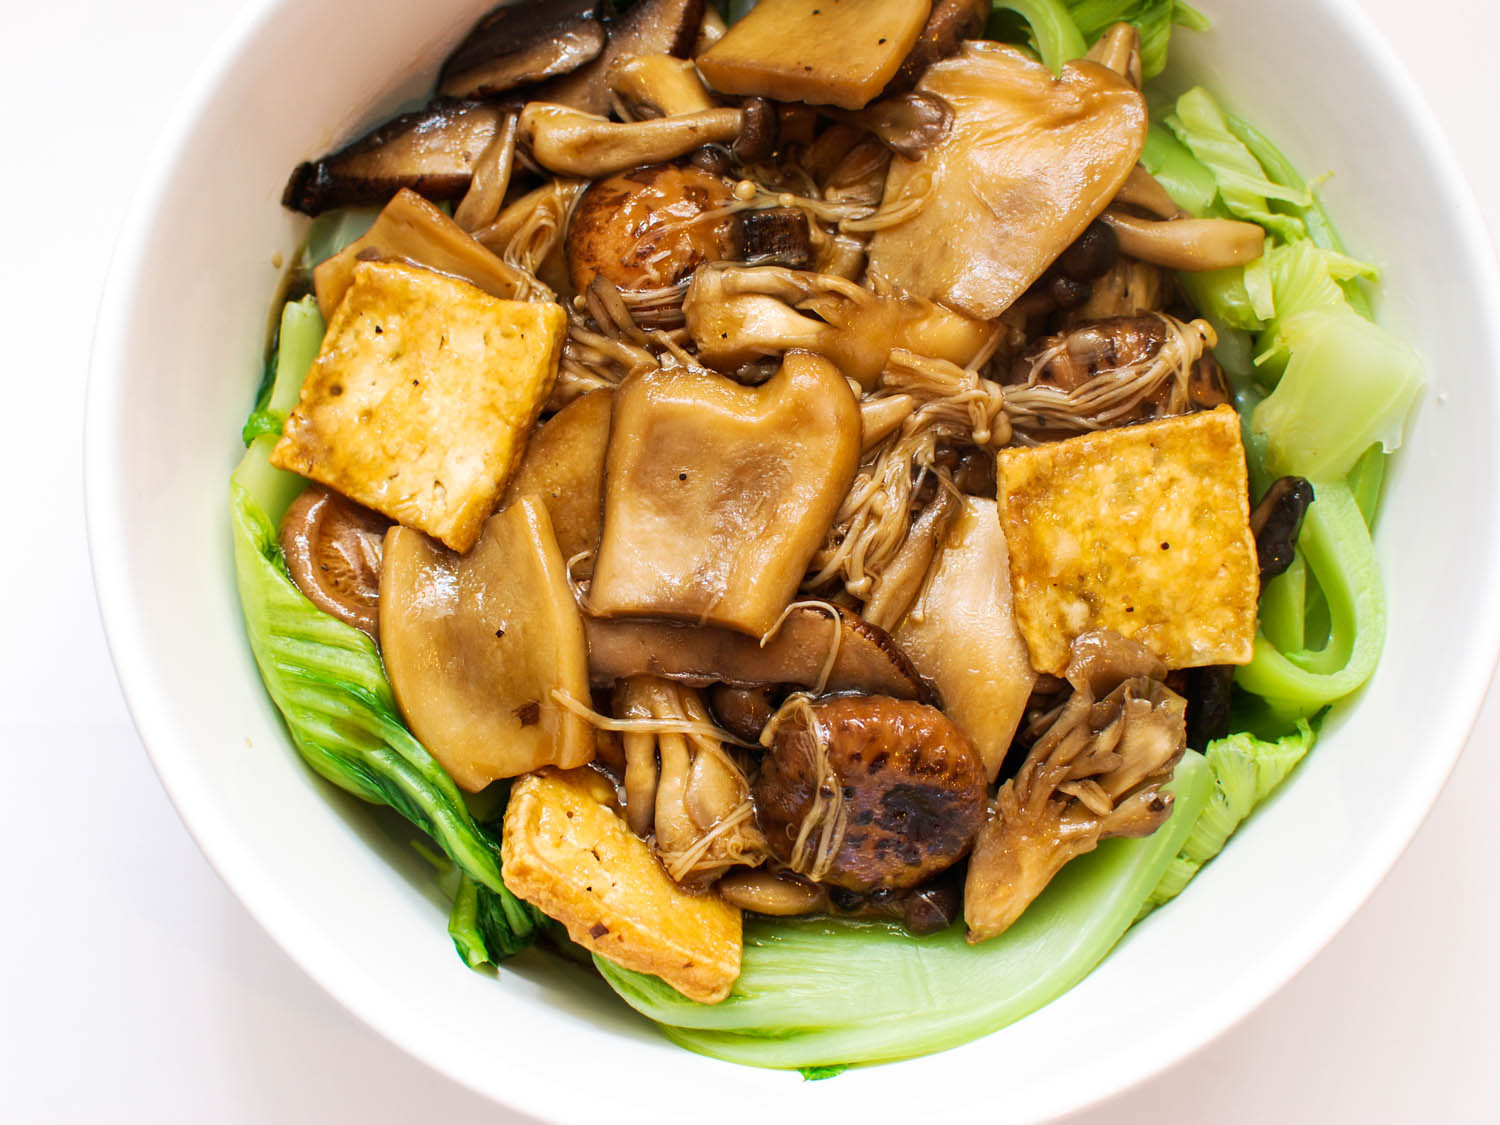 Recipes With Tofu
 Mushrooms and Tofu With Chinese Mustard Greens Recipe